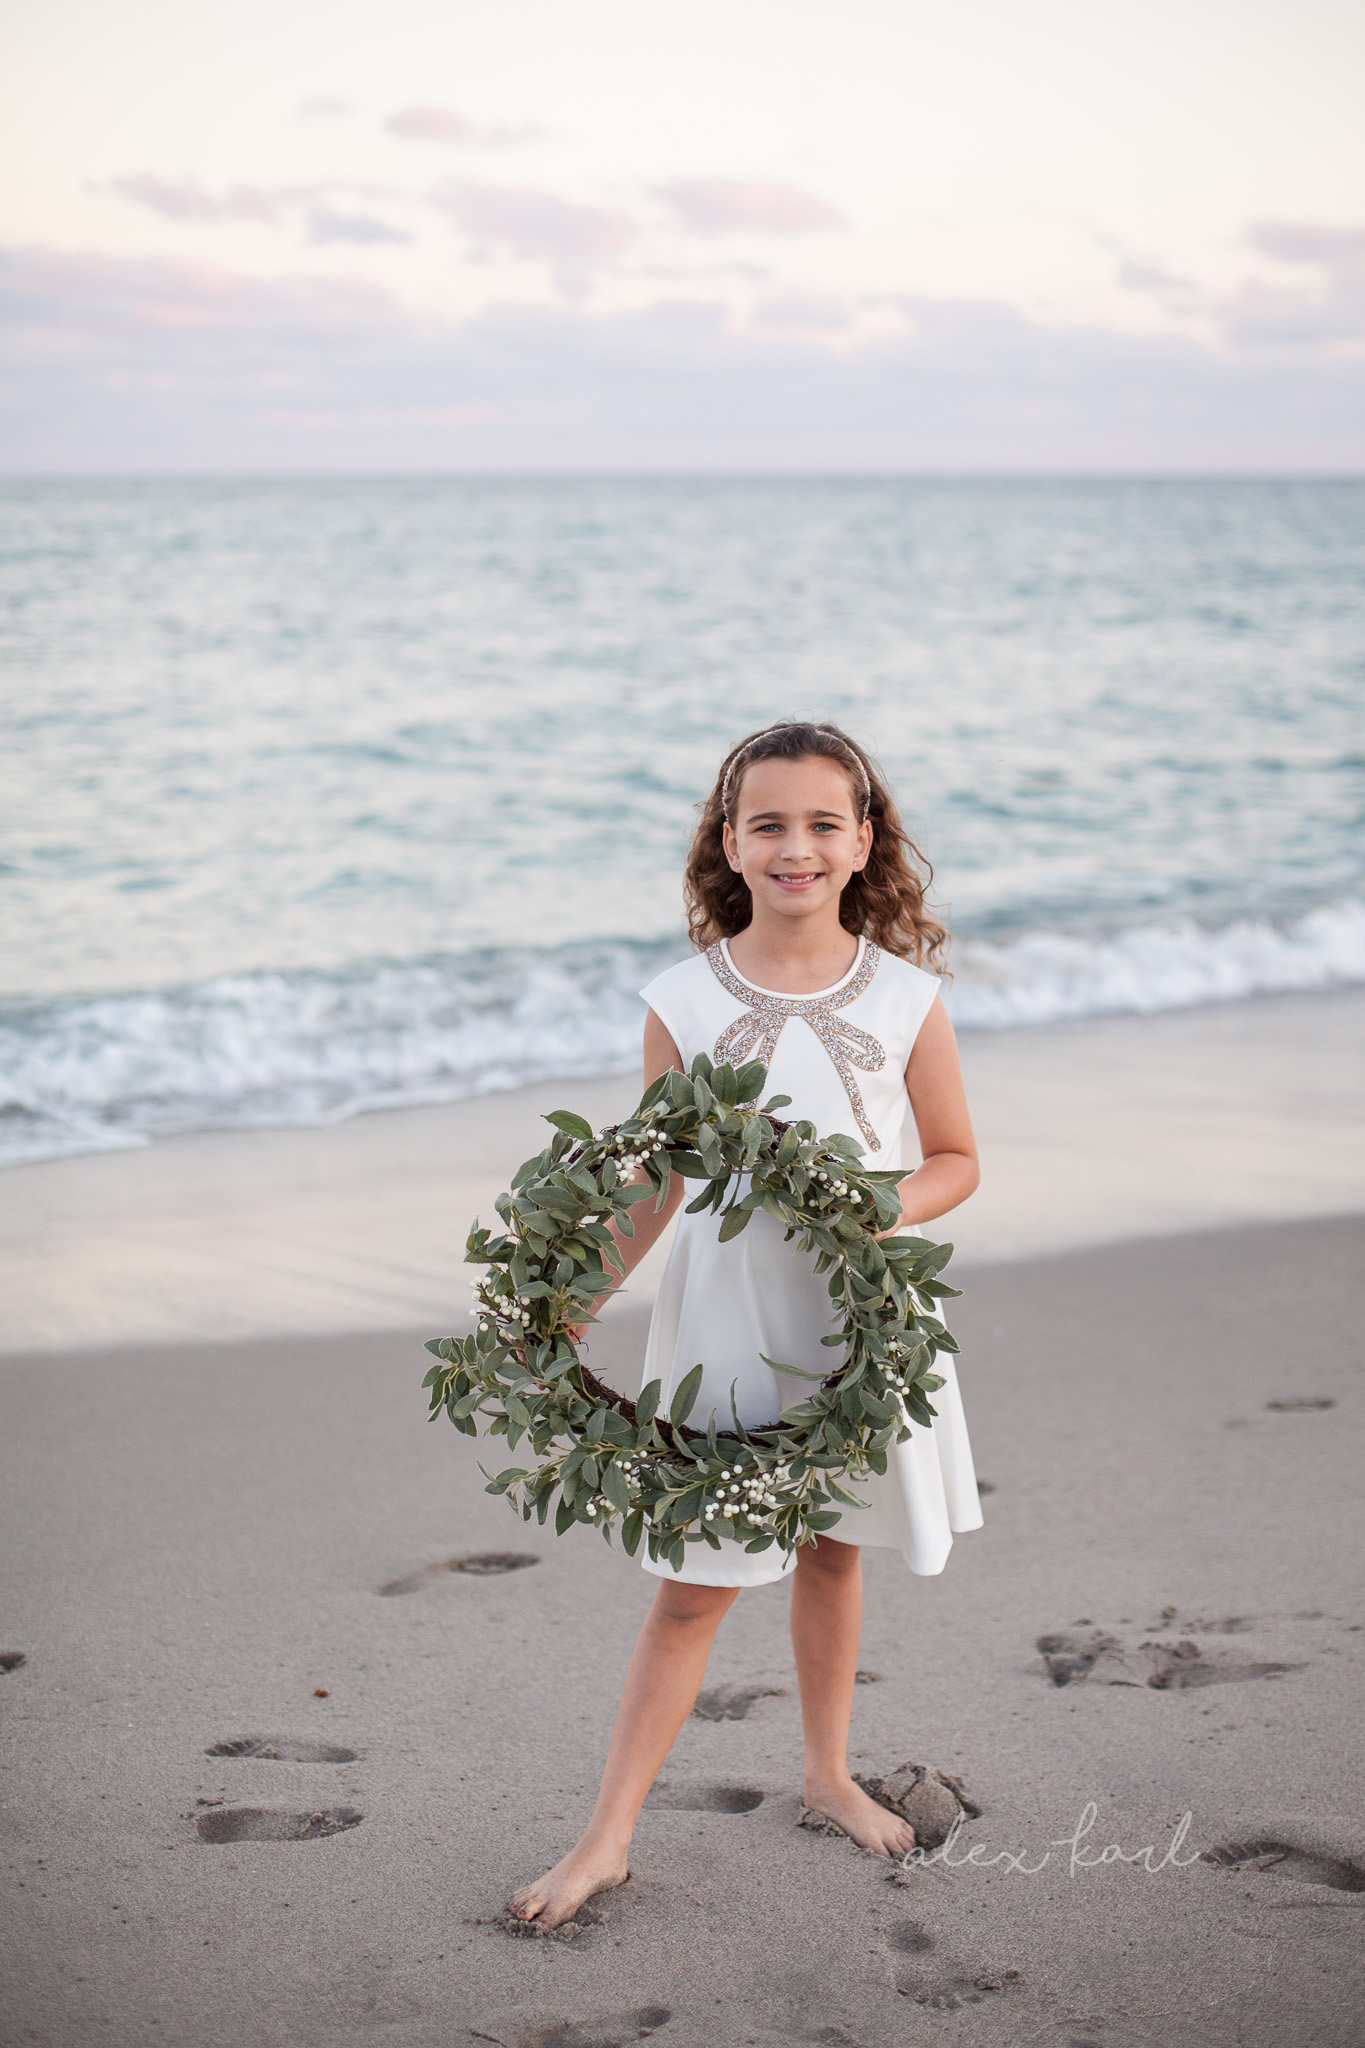 A child holds a wreath | Alex Karl Photography | Palm Beach Family Photographer